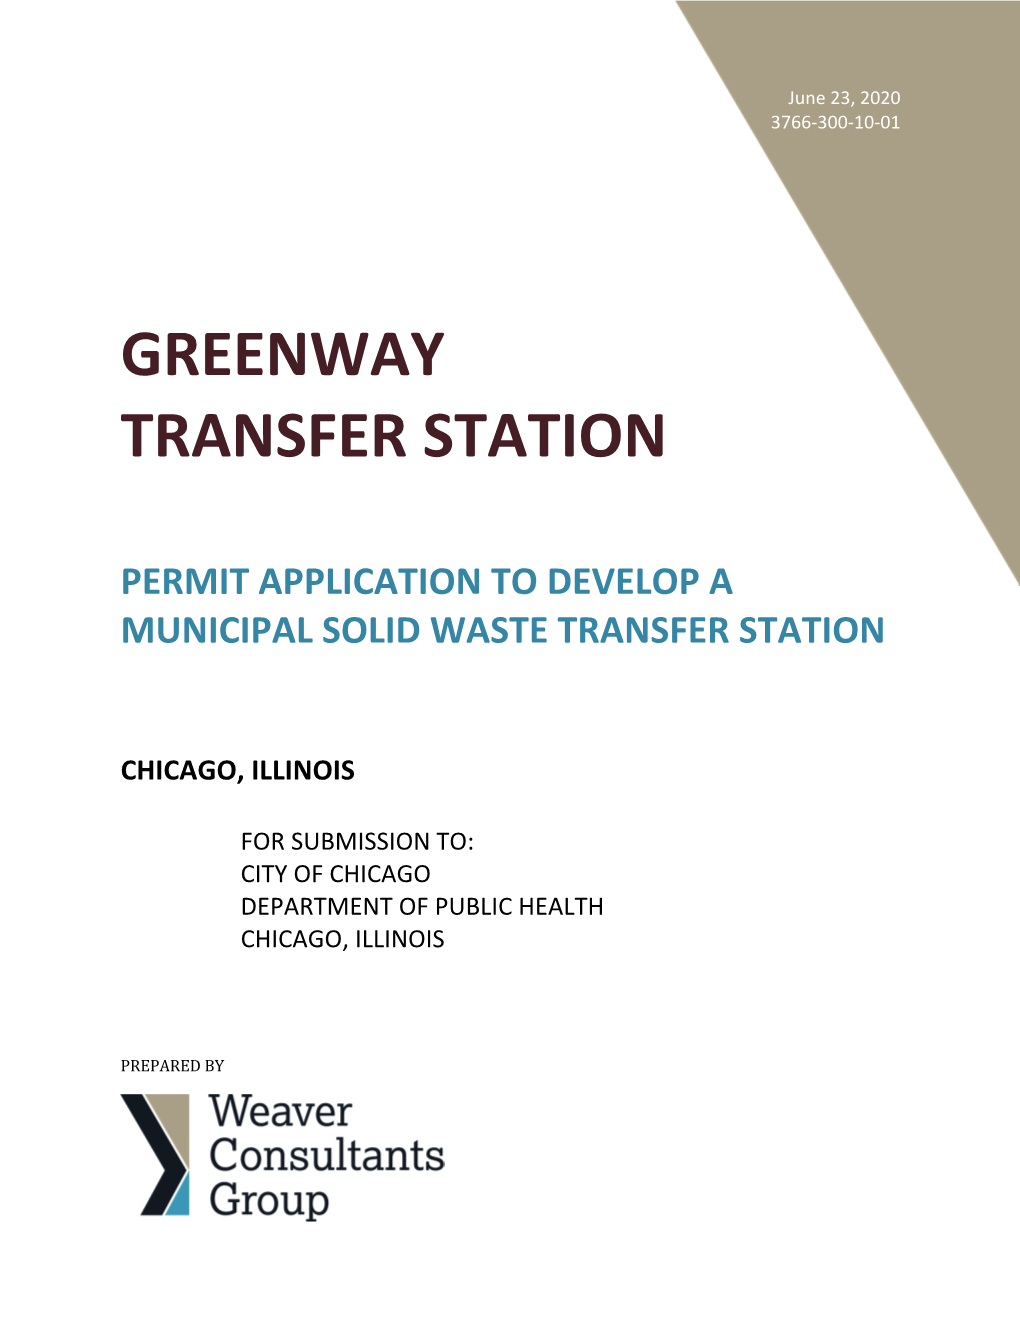 Greenway Transfer Station